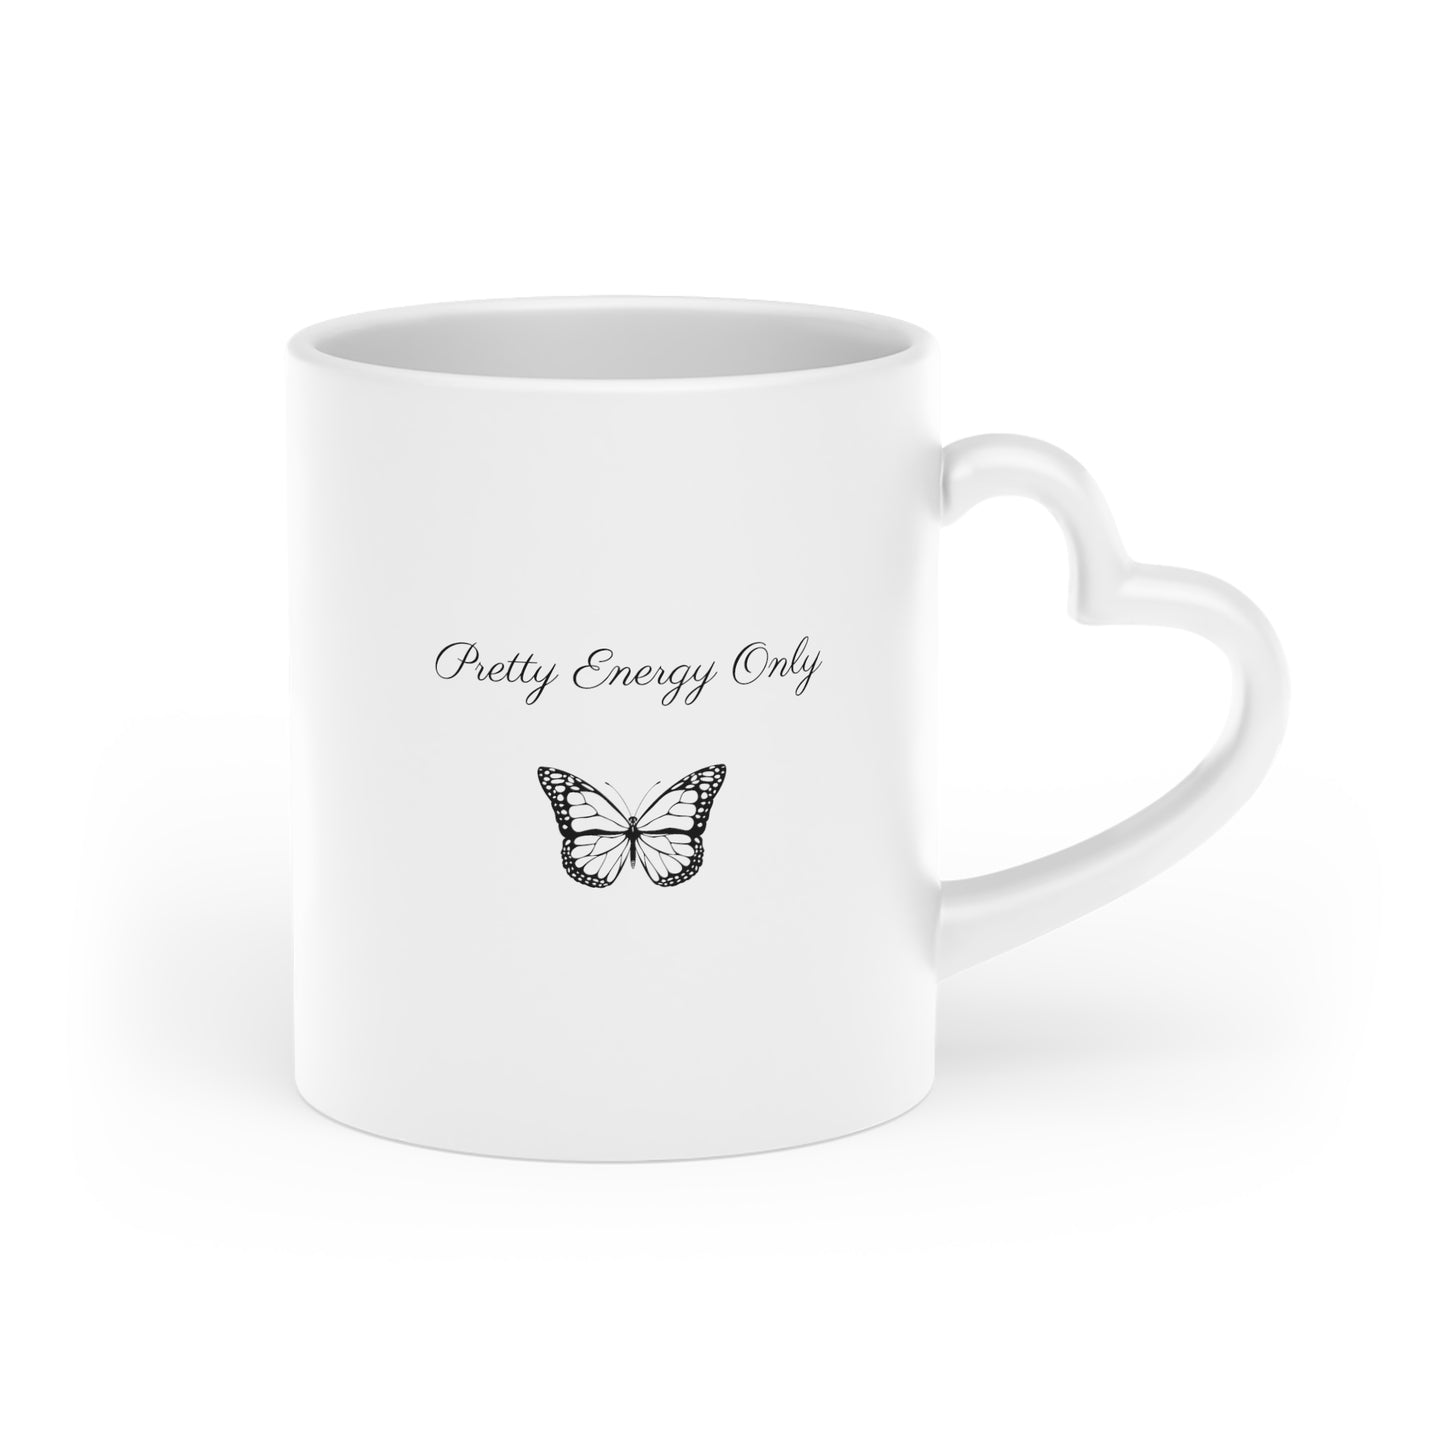 “Pretty Energy Only” Heart-Shaped Mug